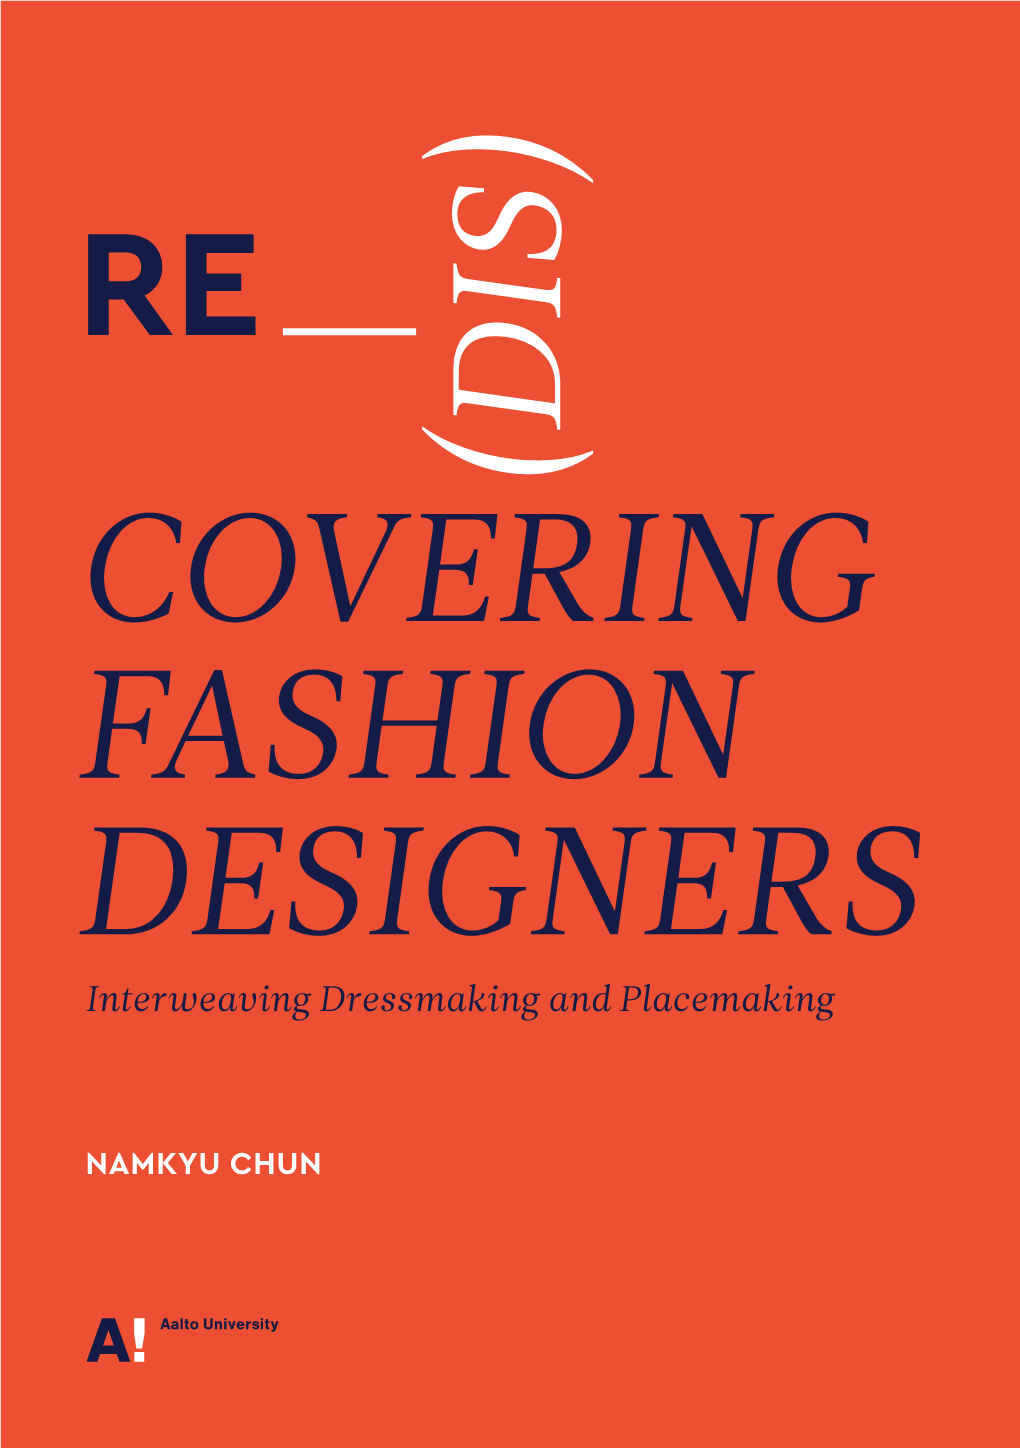 Interweaving Dressmaking and Placemaking